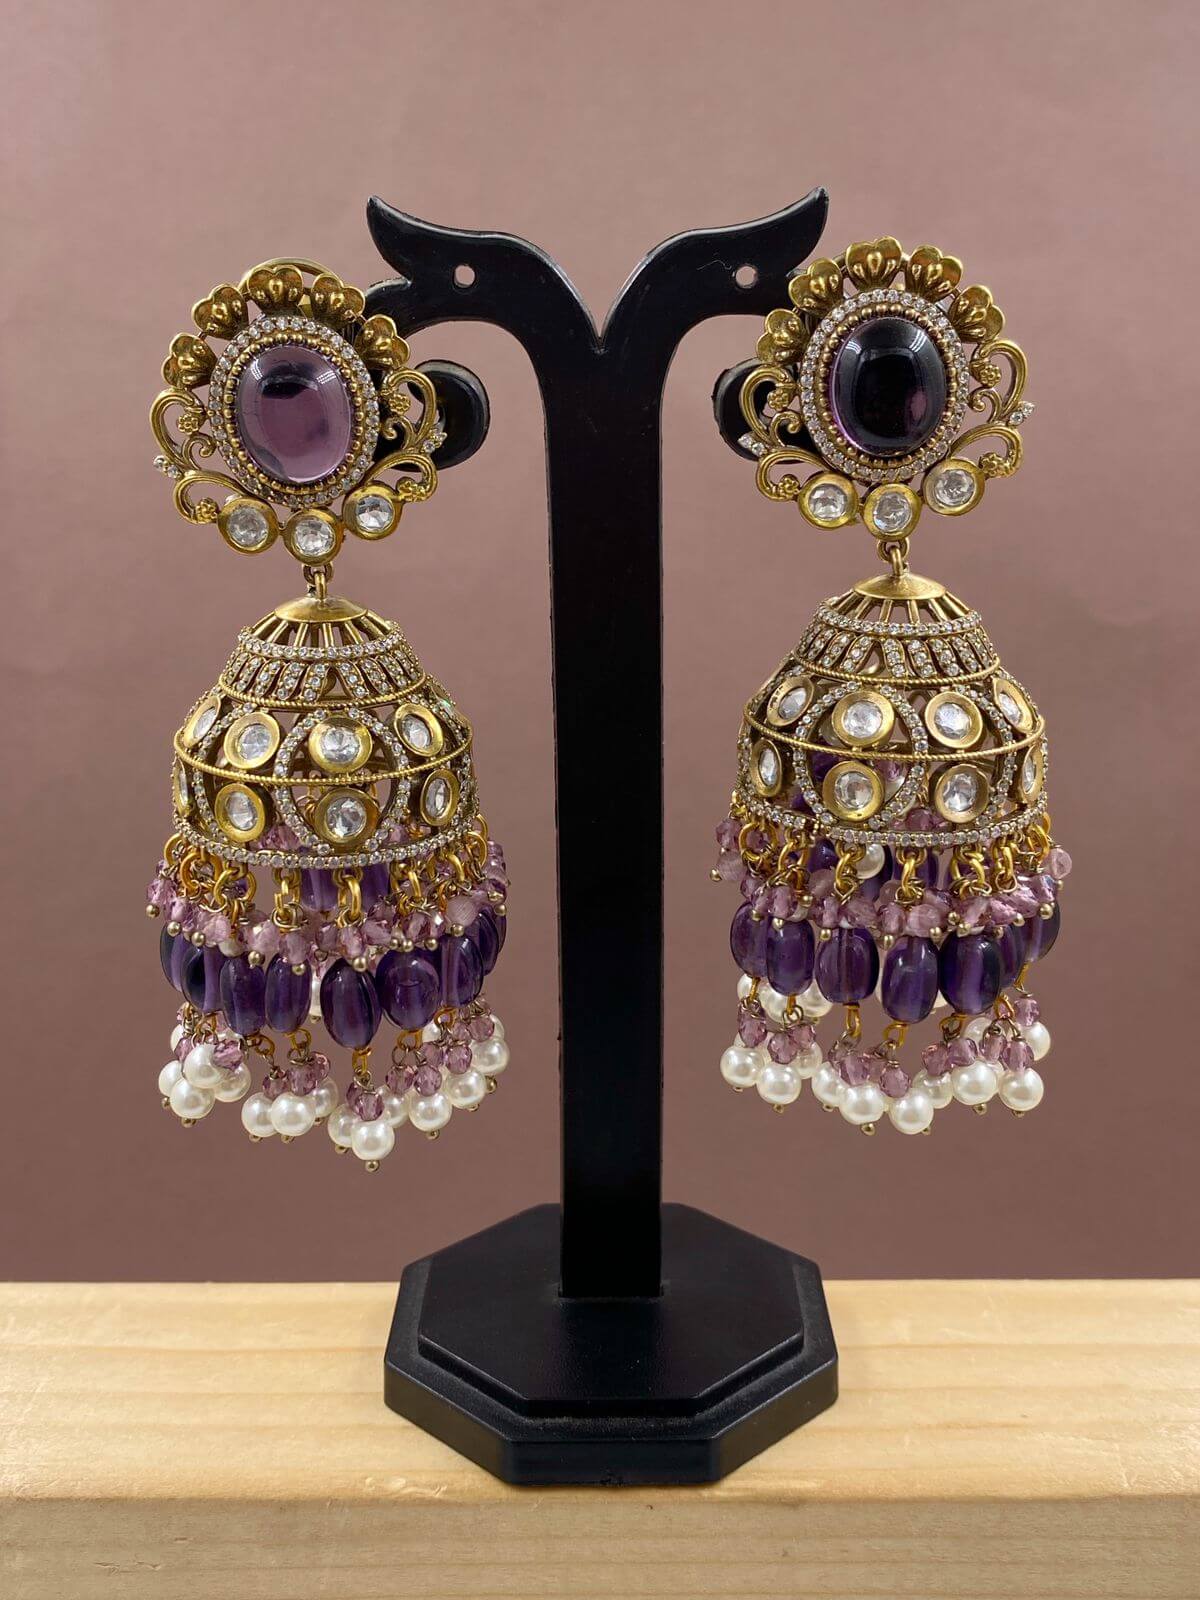 Indian Bollywood Style Hot Pink Enameled Pearl Jhumka Earrings Girls Jewelry  Set | eBay